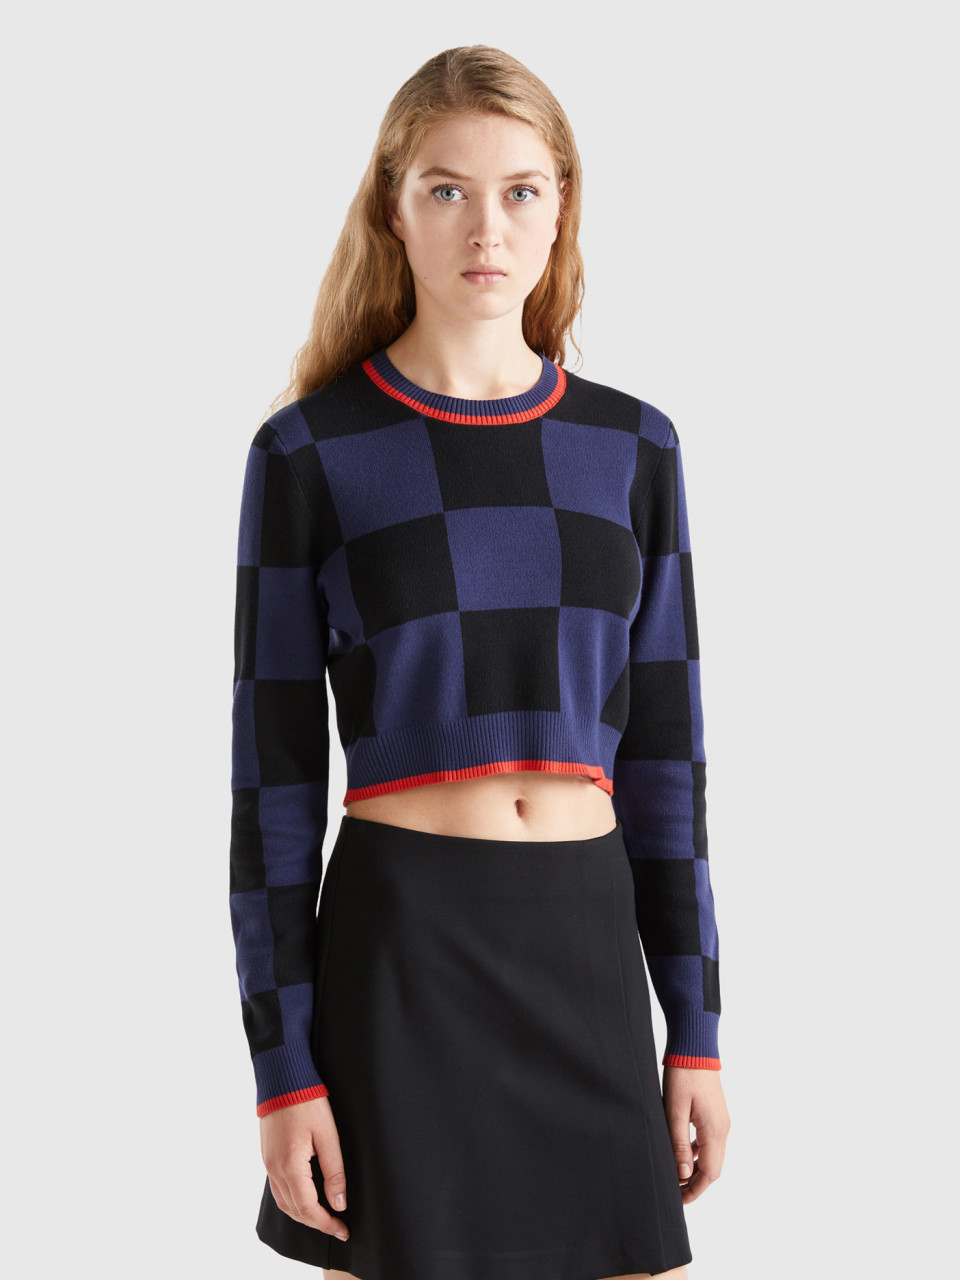 Benetton, Cropped Checkered Sweater, Dark Blue, Women